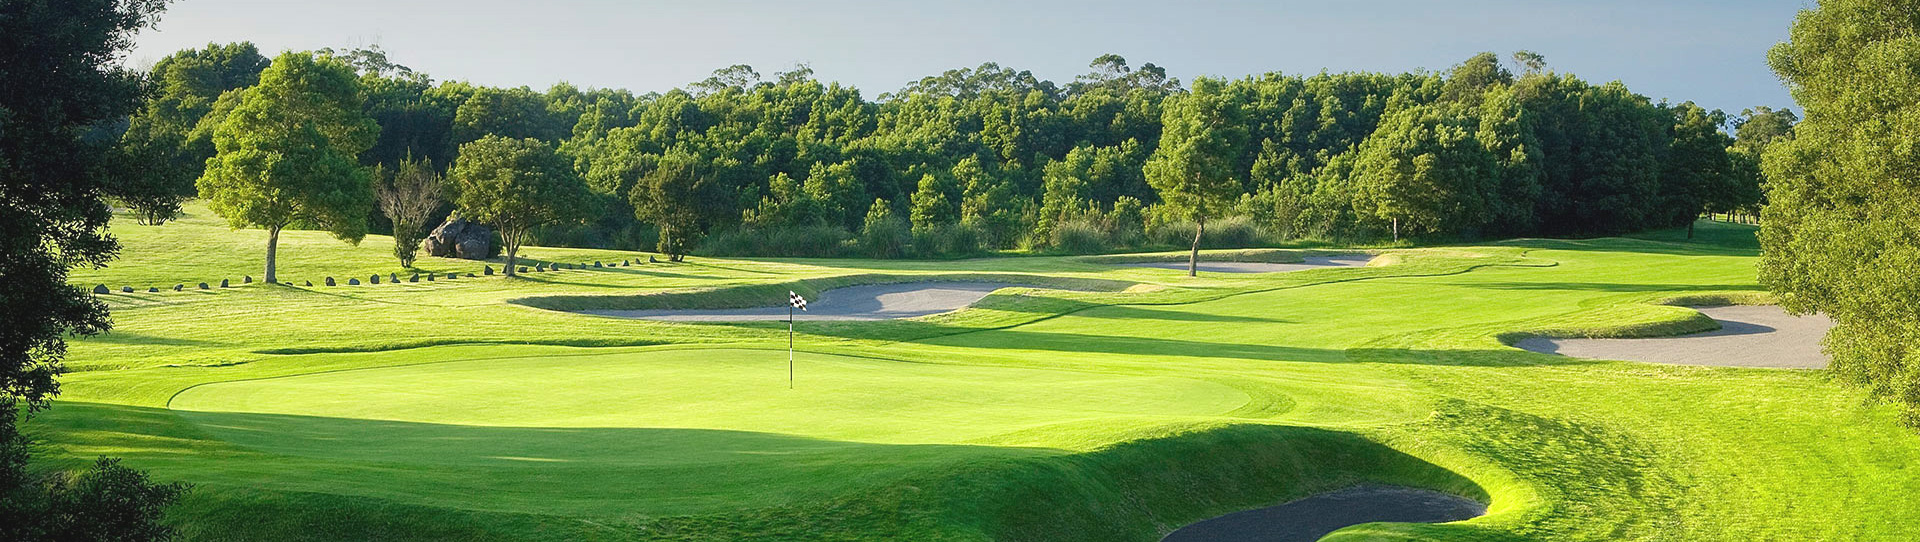 Portugal golf courses - Batalha Golf Club - Photo 3